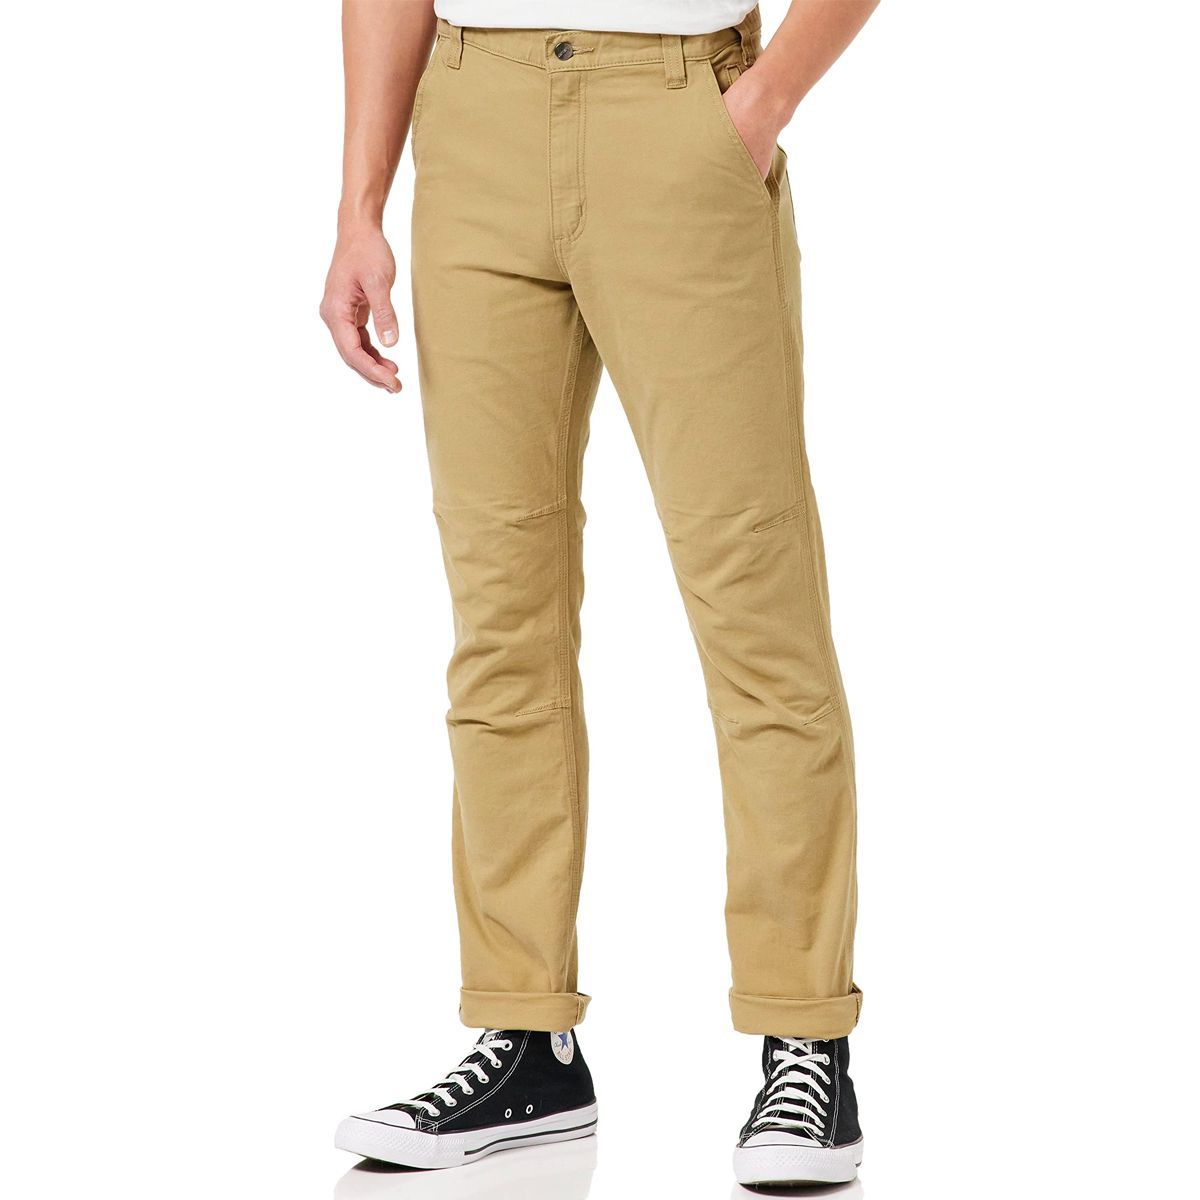 Wrangler Mens Casual Flat Front Khaki Pants